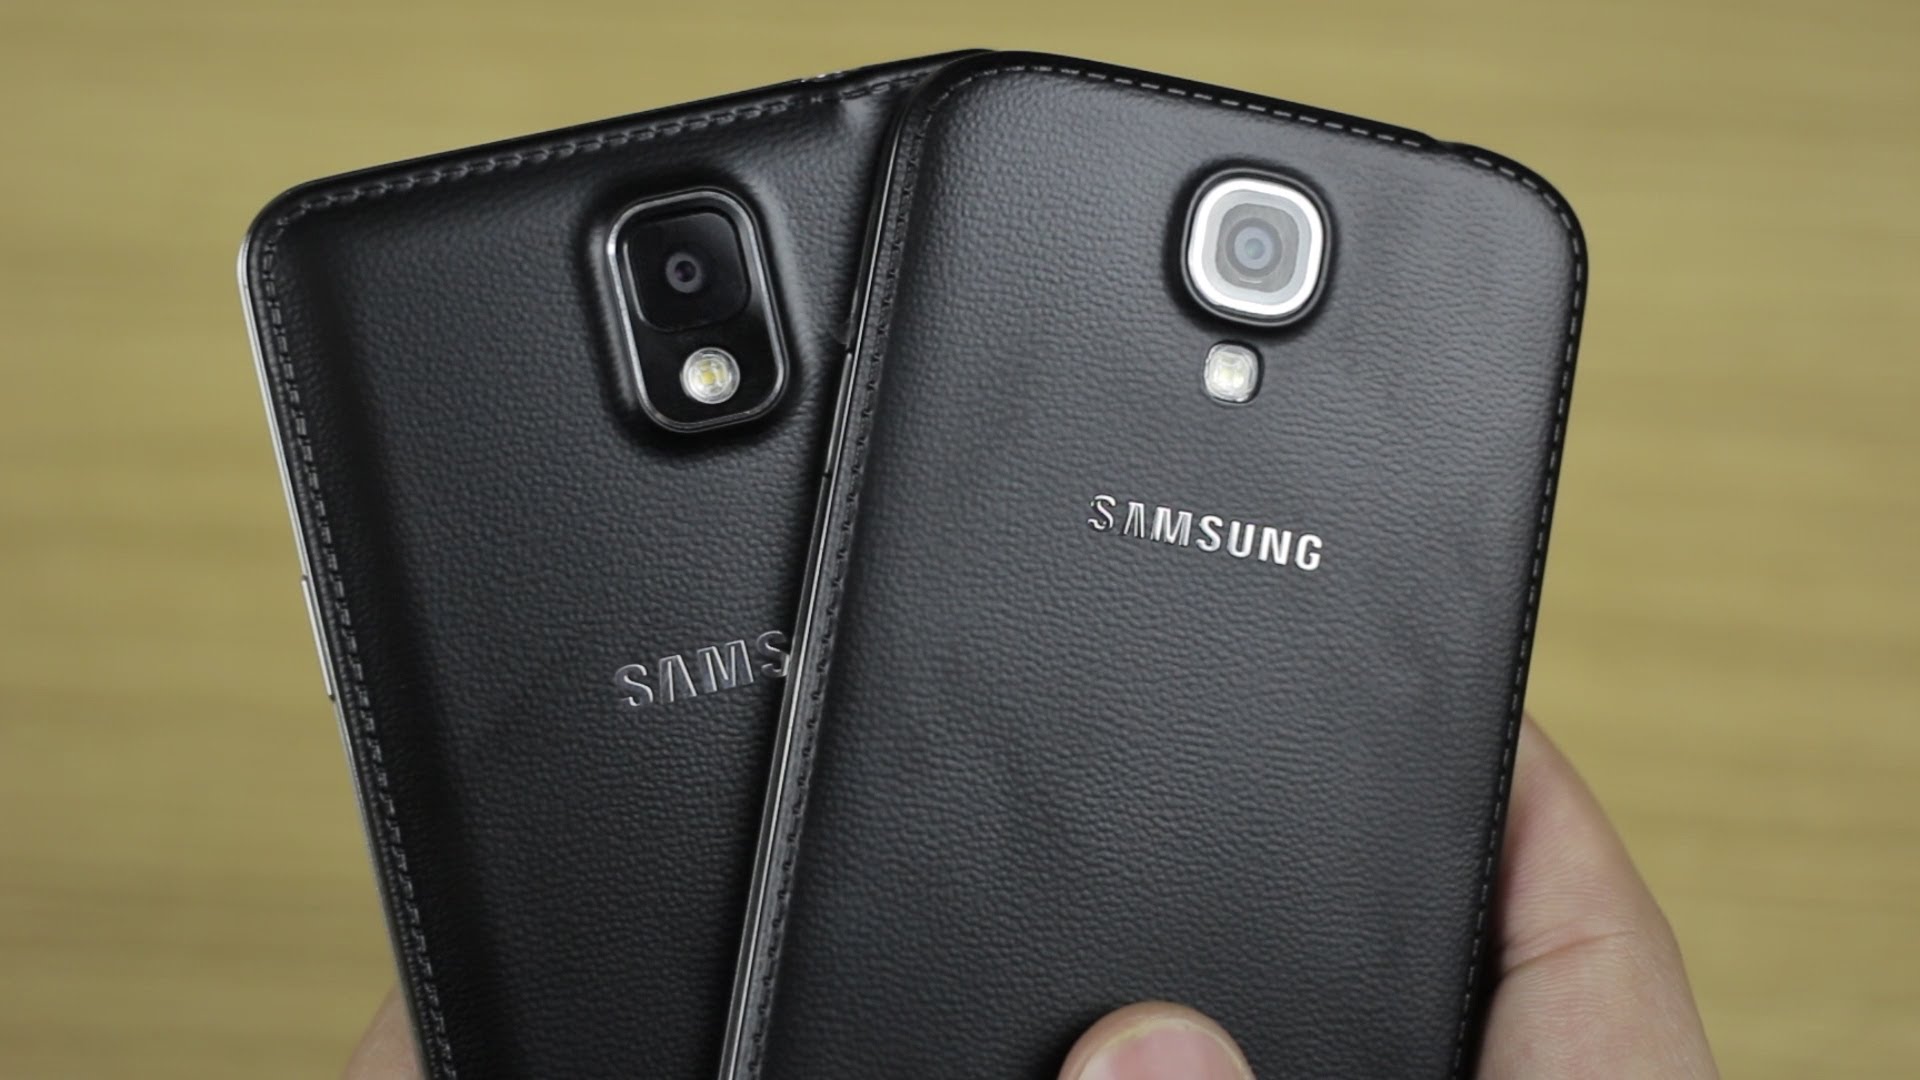 Samsung s9 черный. Samsung s4 Black. Самсунг галакси с4 Блэк эдишн. S4 блек самсунг галакси Блэк эдишн. Samsung Galaxy s4 Mini Black Edition.